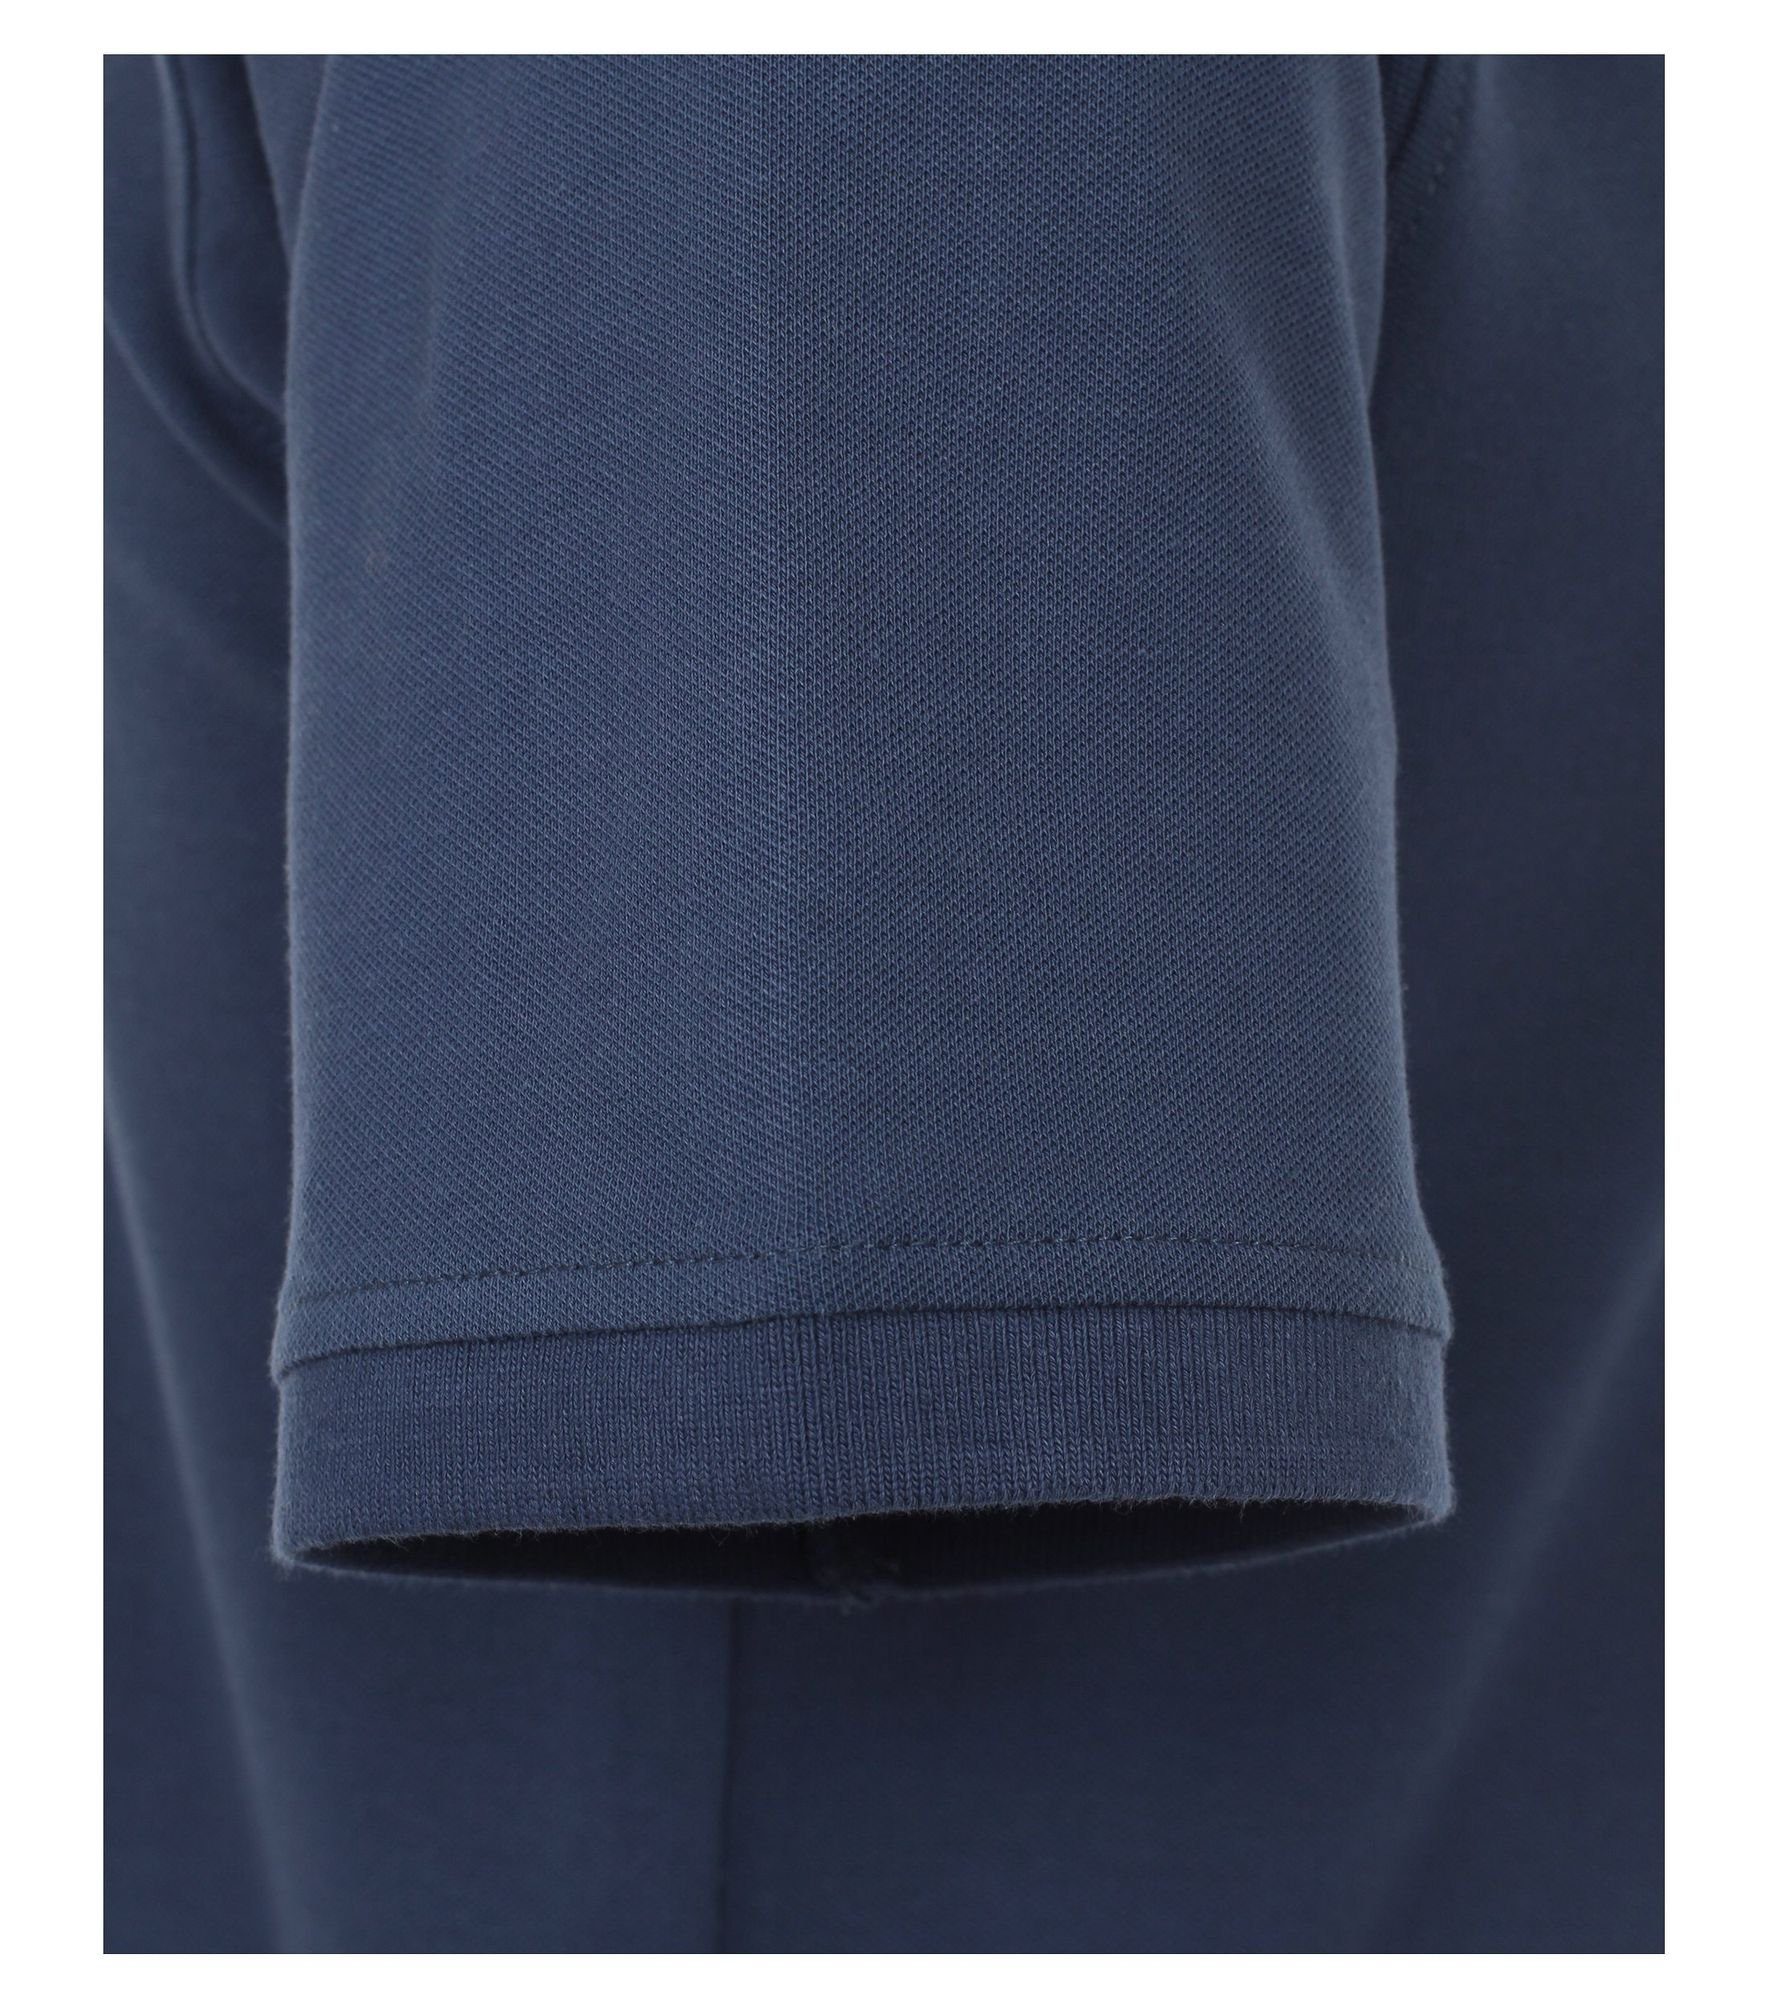 Blau unifarben CASAMODA Poloshirt Poloshirt (125) Polo-Shirt